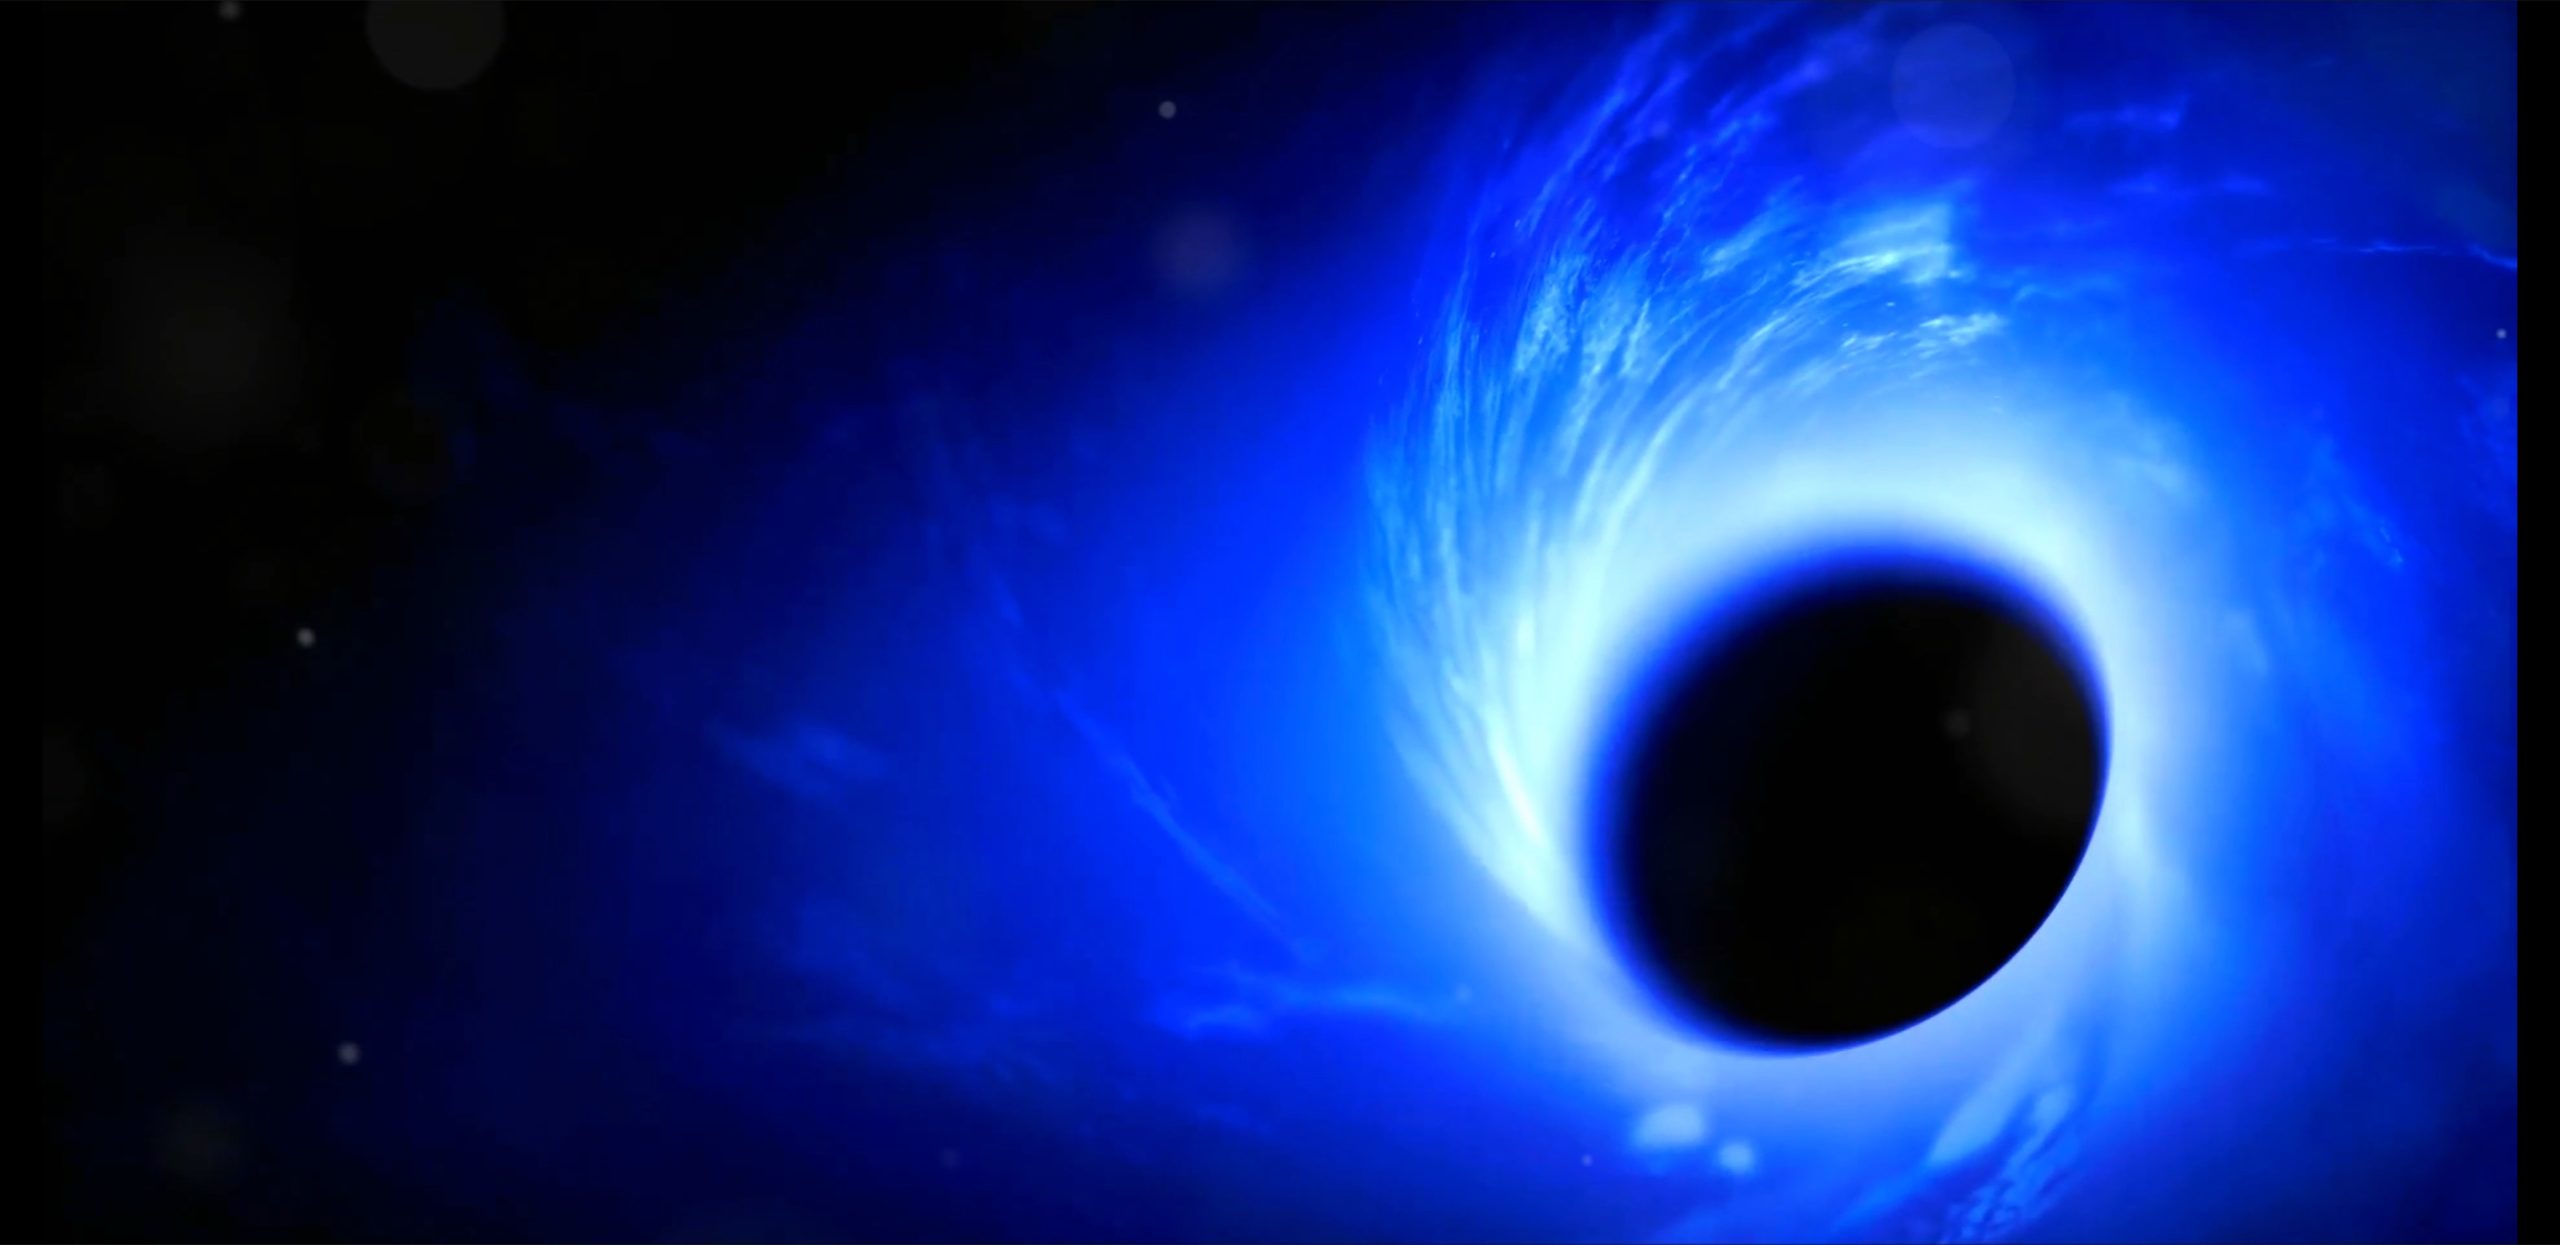 Black Holes: The Dark Mystery